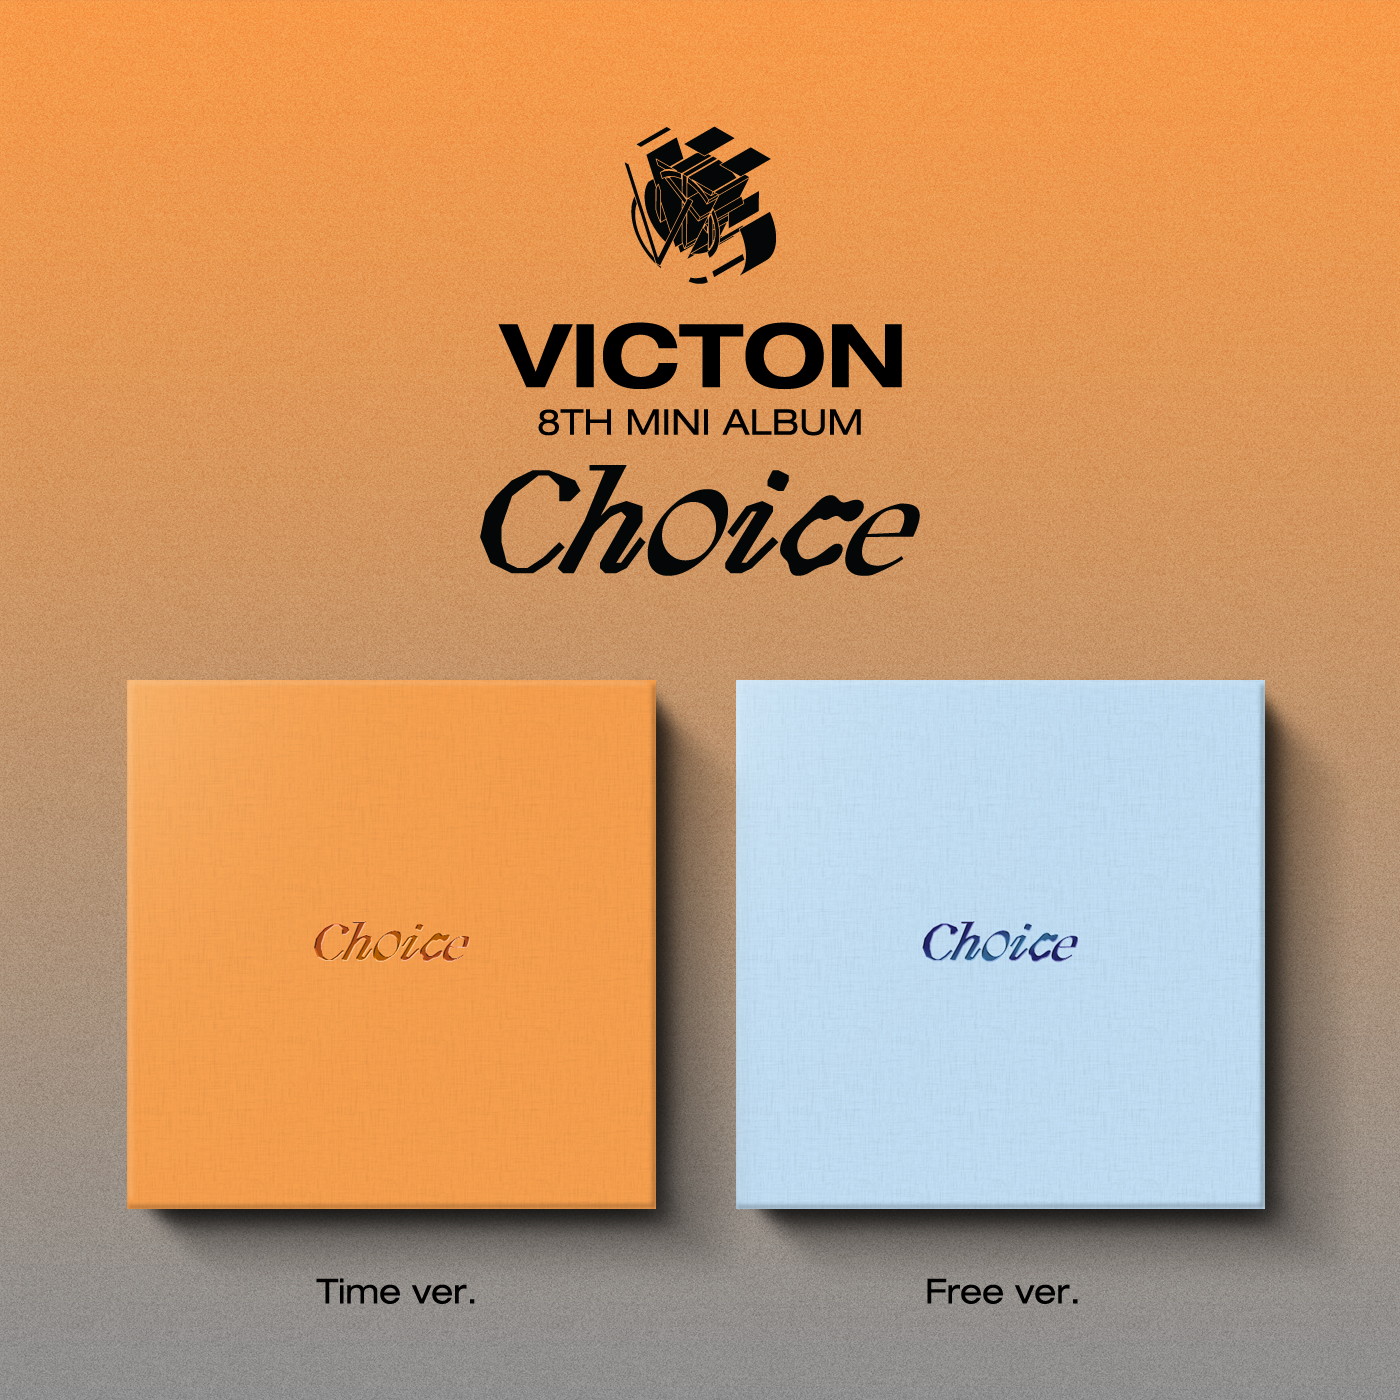 [全款 裸专] [2CD 套装] VICTON - 迷你8辑 [Choice] (Time ver. + Free ver.)_StrawberryJelly_林势俊